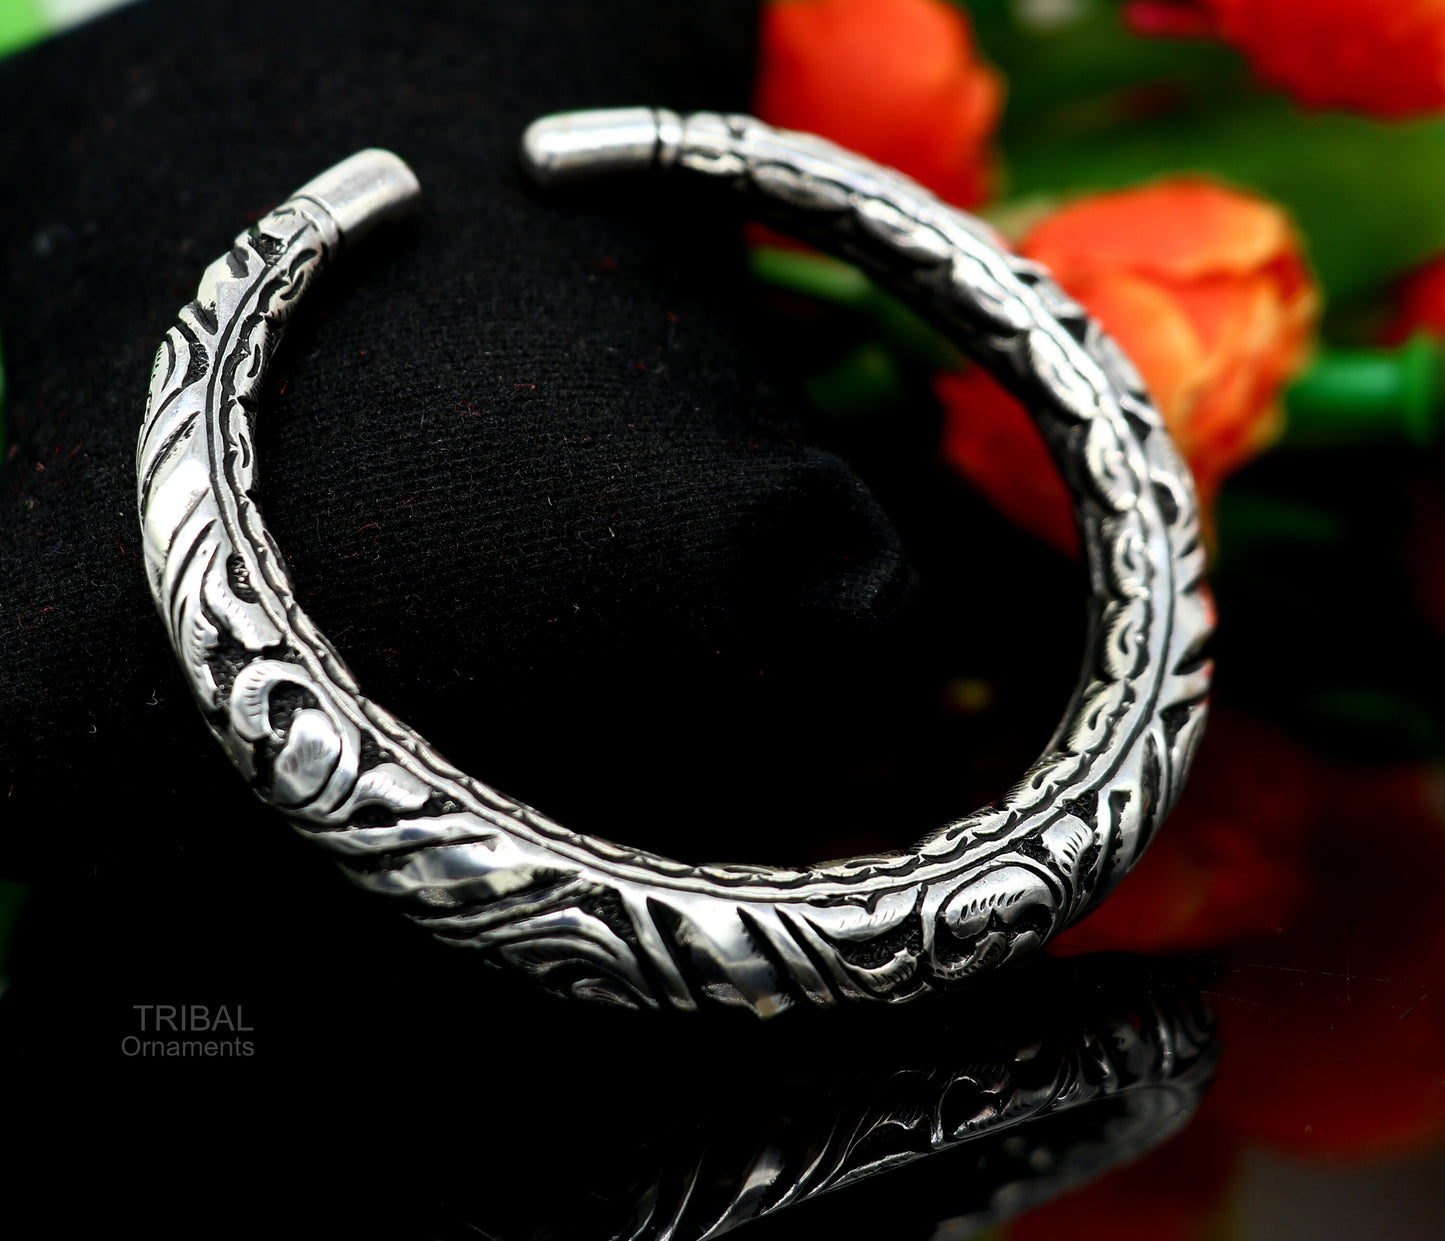 Elegant 925 Sterling silver handcrafted chitai work customized oxidized stylish vintage design bangle bracelet kada tribal jewelry nsk398 - TRIBAL ORNAMENTS